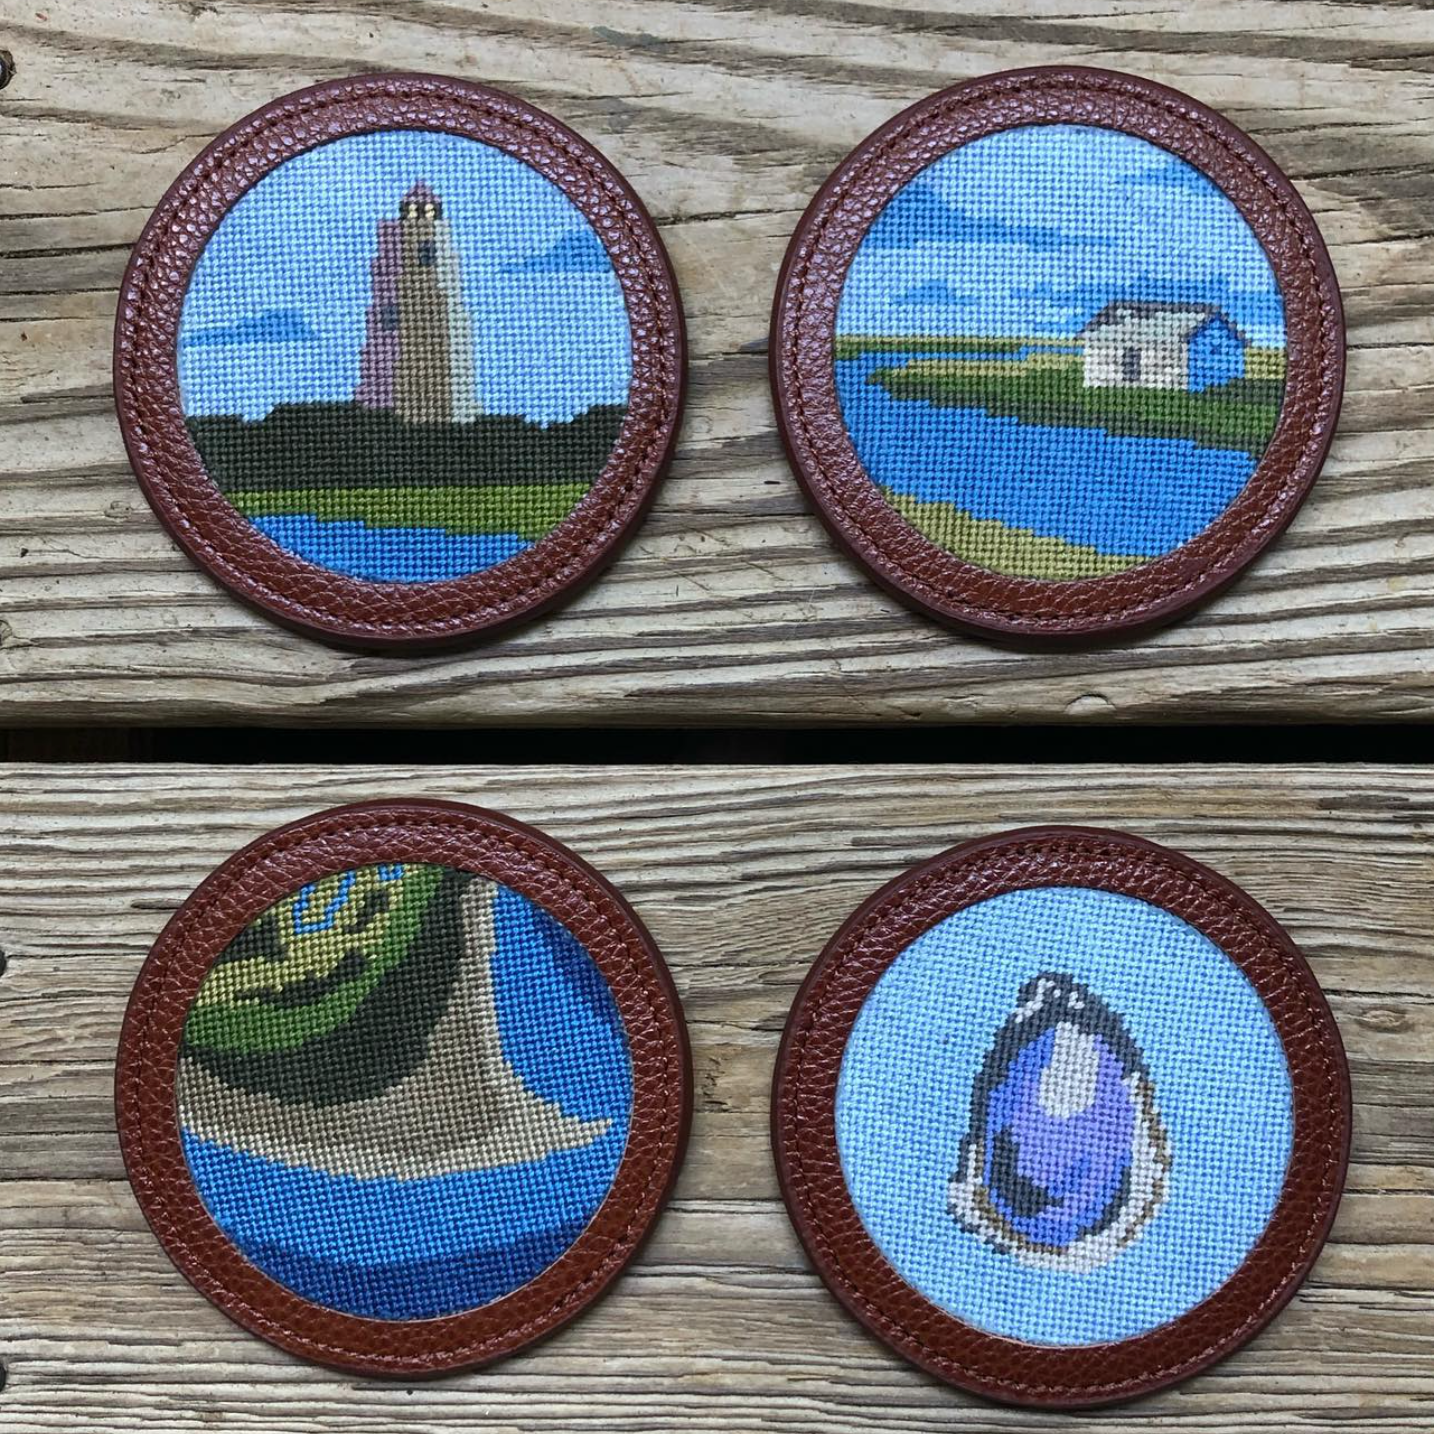 Bald Head Island Needlepoint Coasters - Set